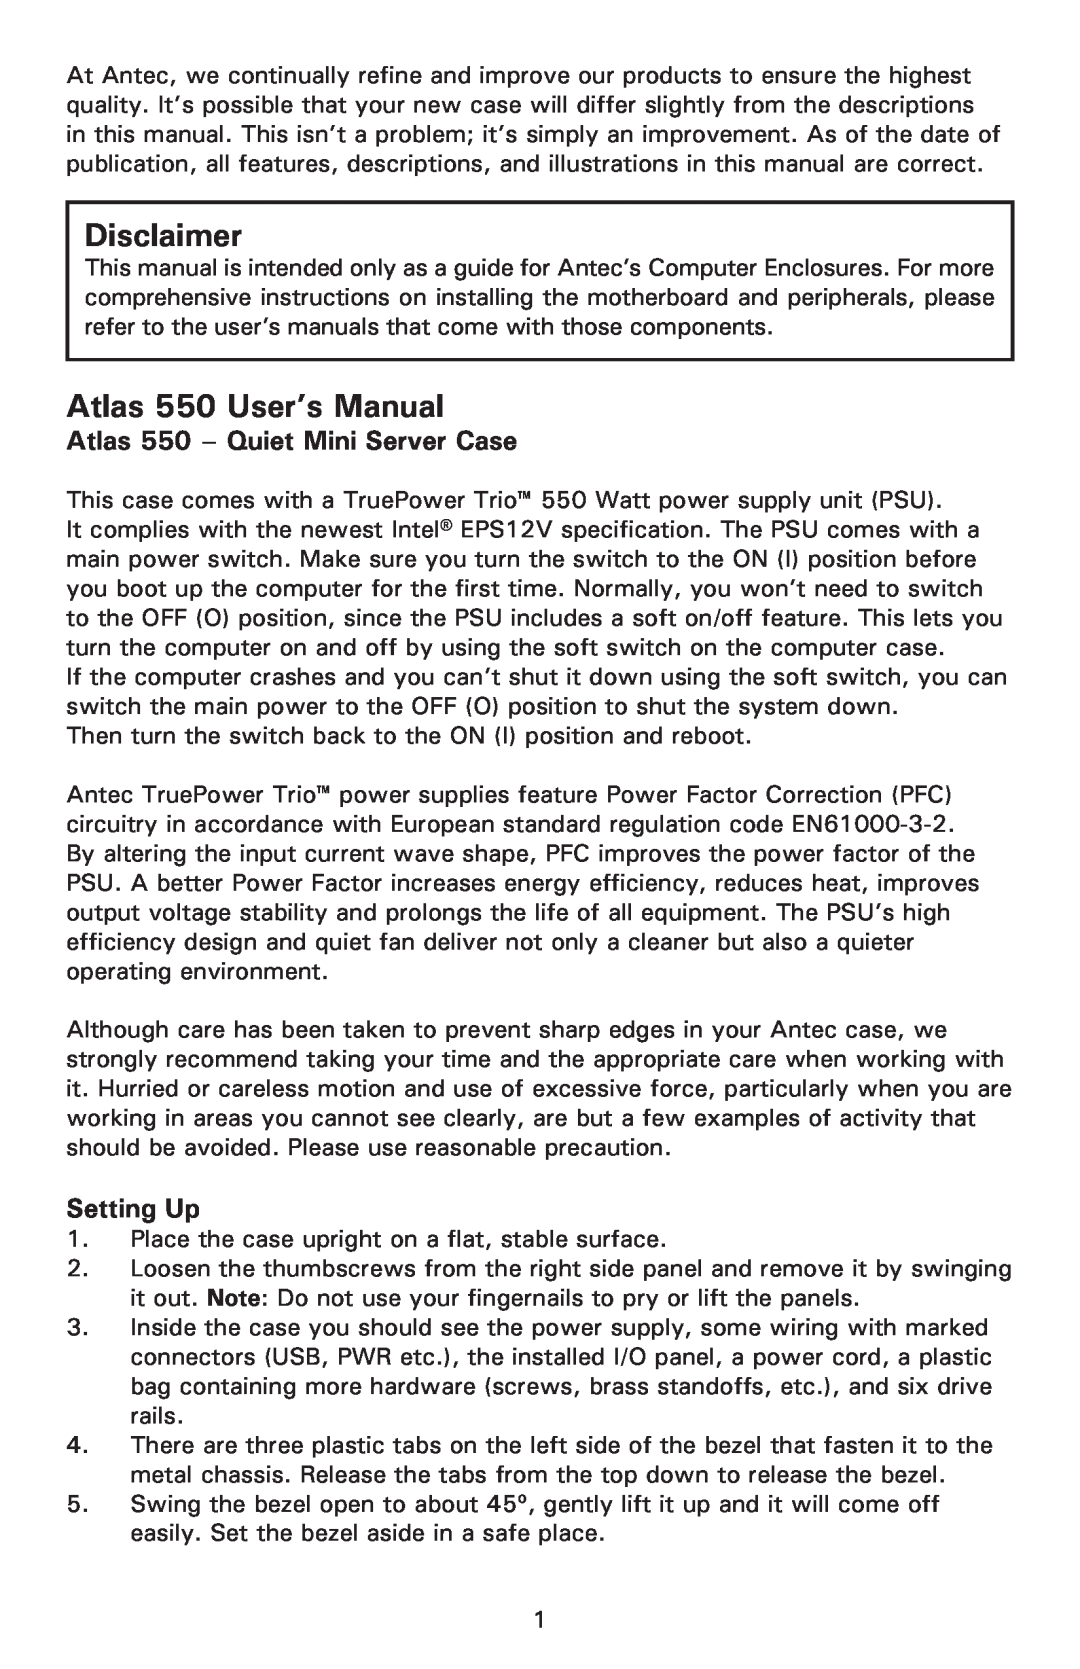 Antec user manual Disclaimer, Atlas 550 User’s Manual, Atlas 550 - Quiet Mini Server Case, Setting Up 